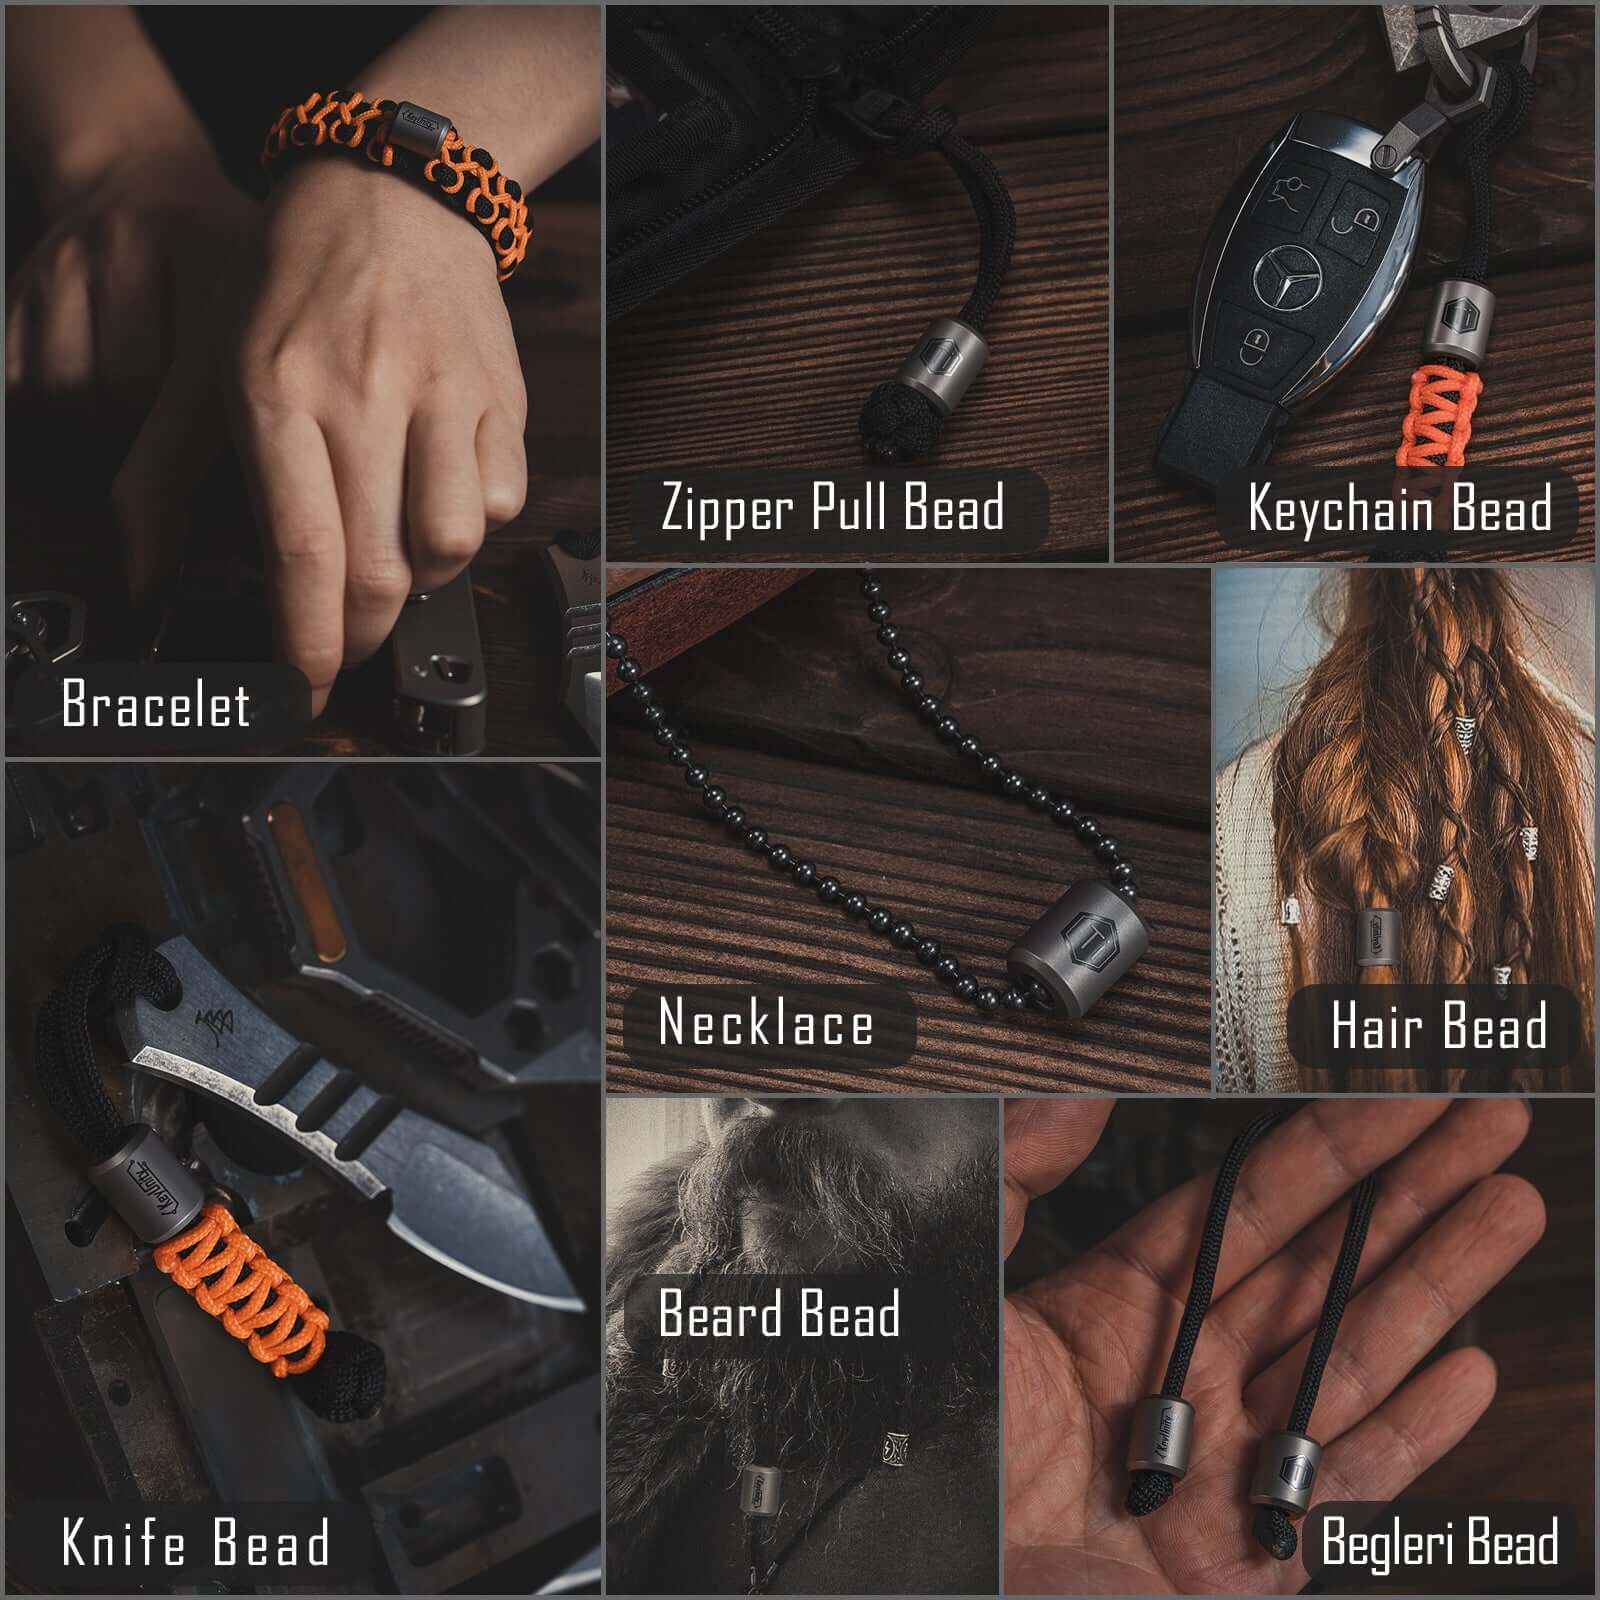 KA01 Ti-6Al-4V Bead-2 Pcs Knife Landyard Beads Outdoor EDC Accessories for Bracelet Necklace Mini Flashlight Backpack Keychain